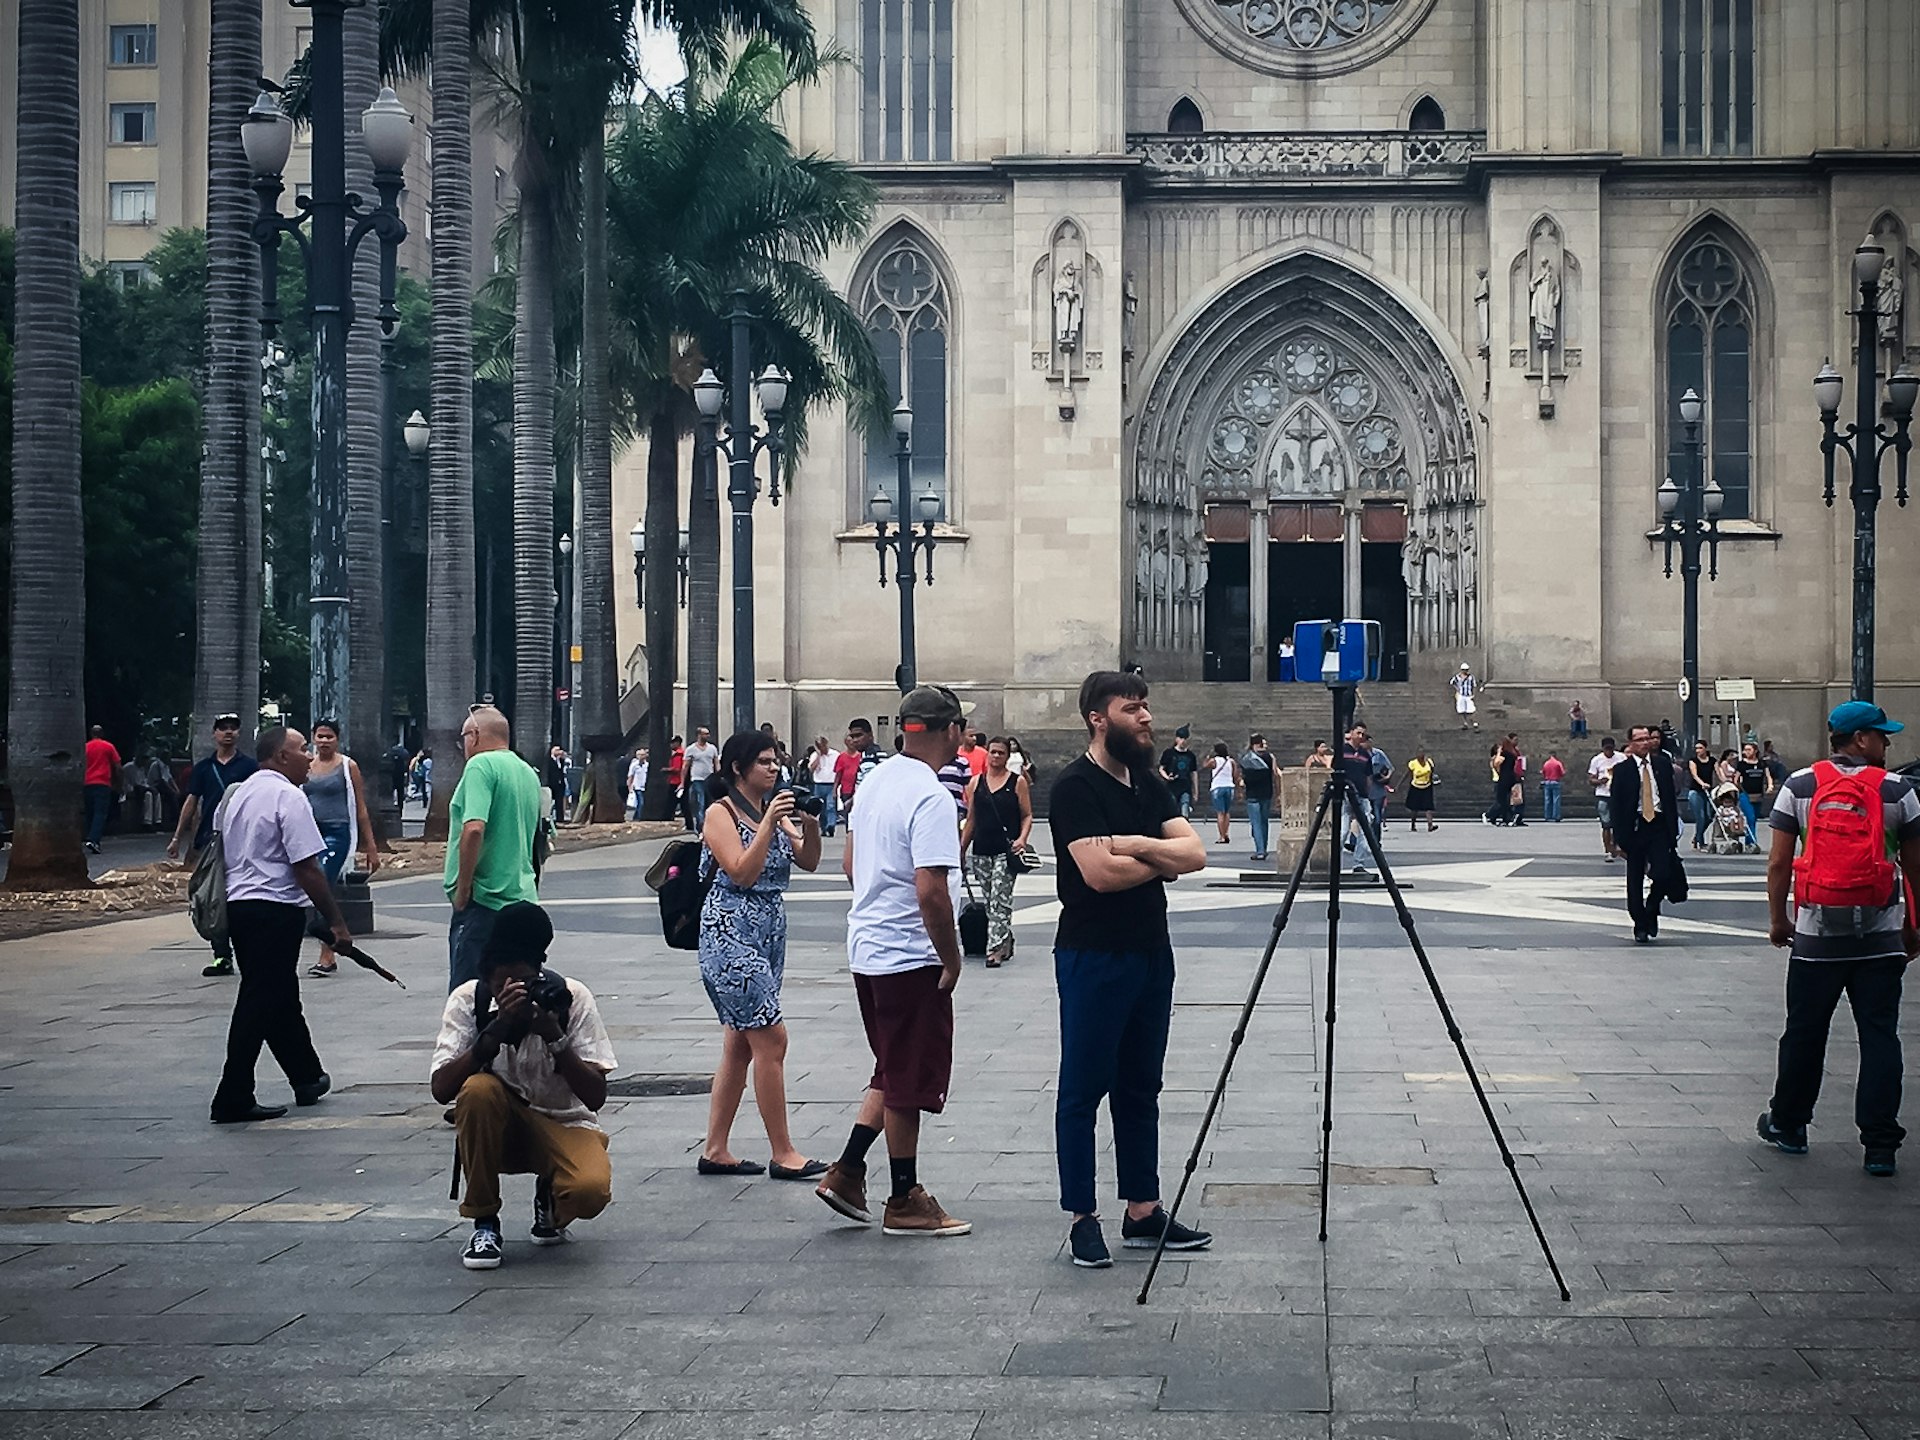 Using the Lidar scanner in central São Paulo